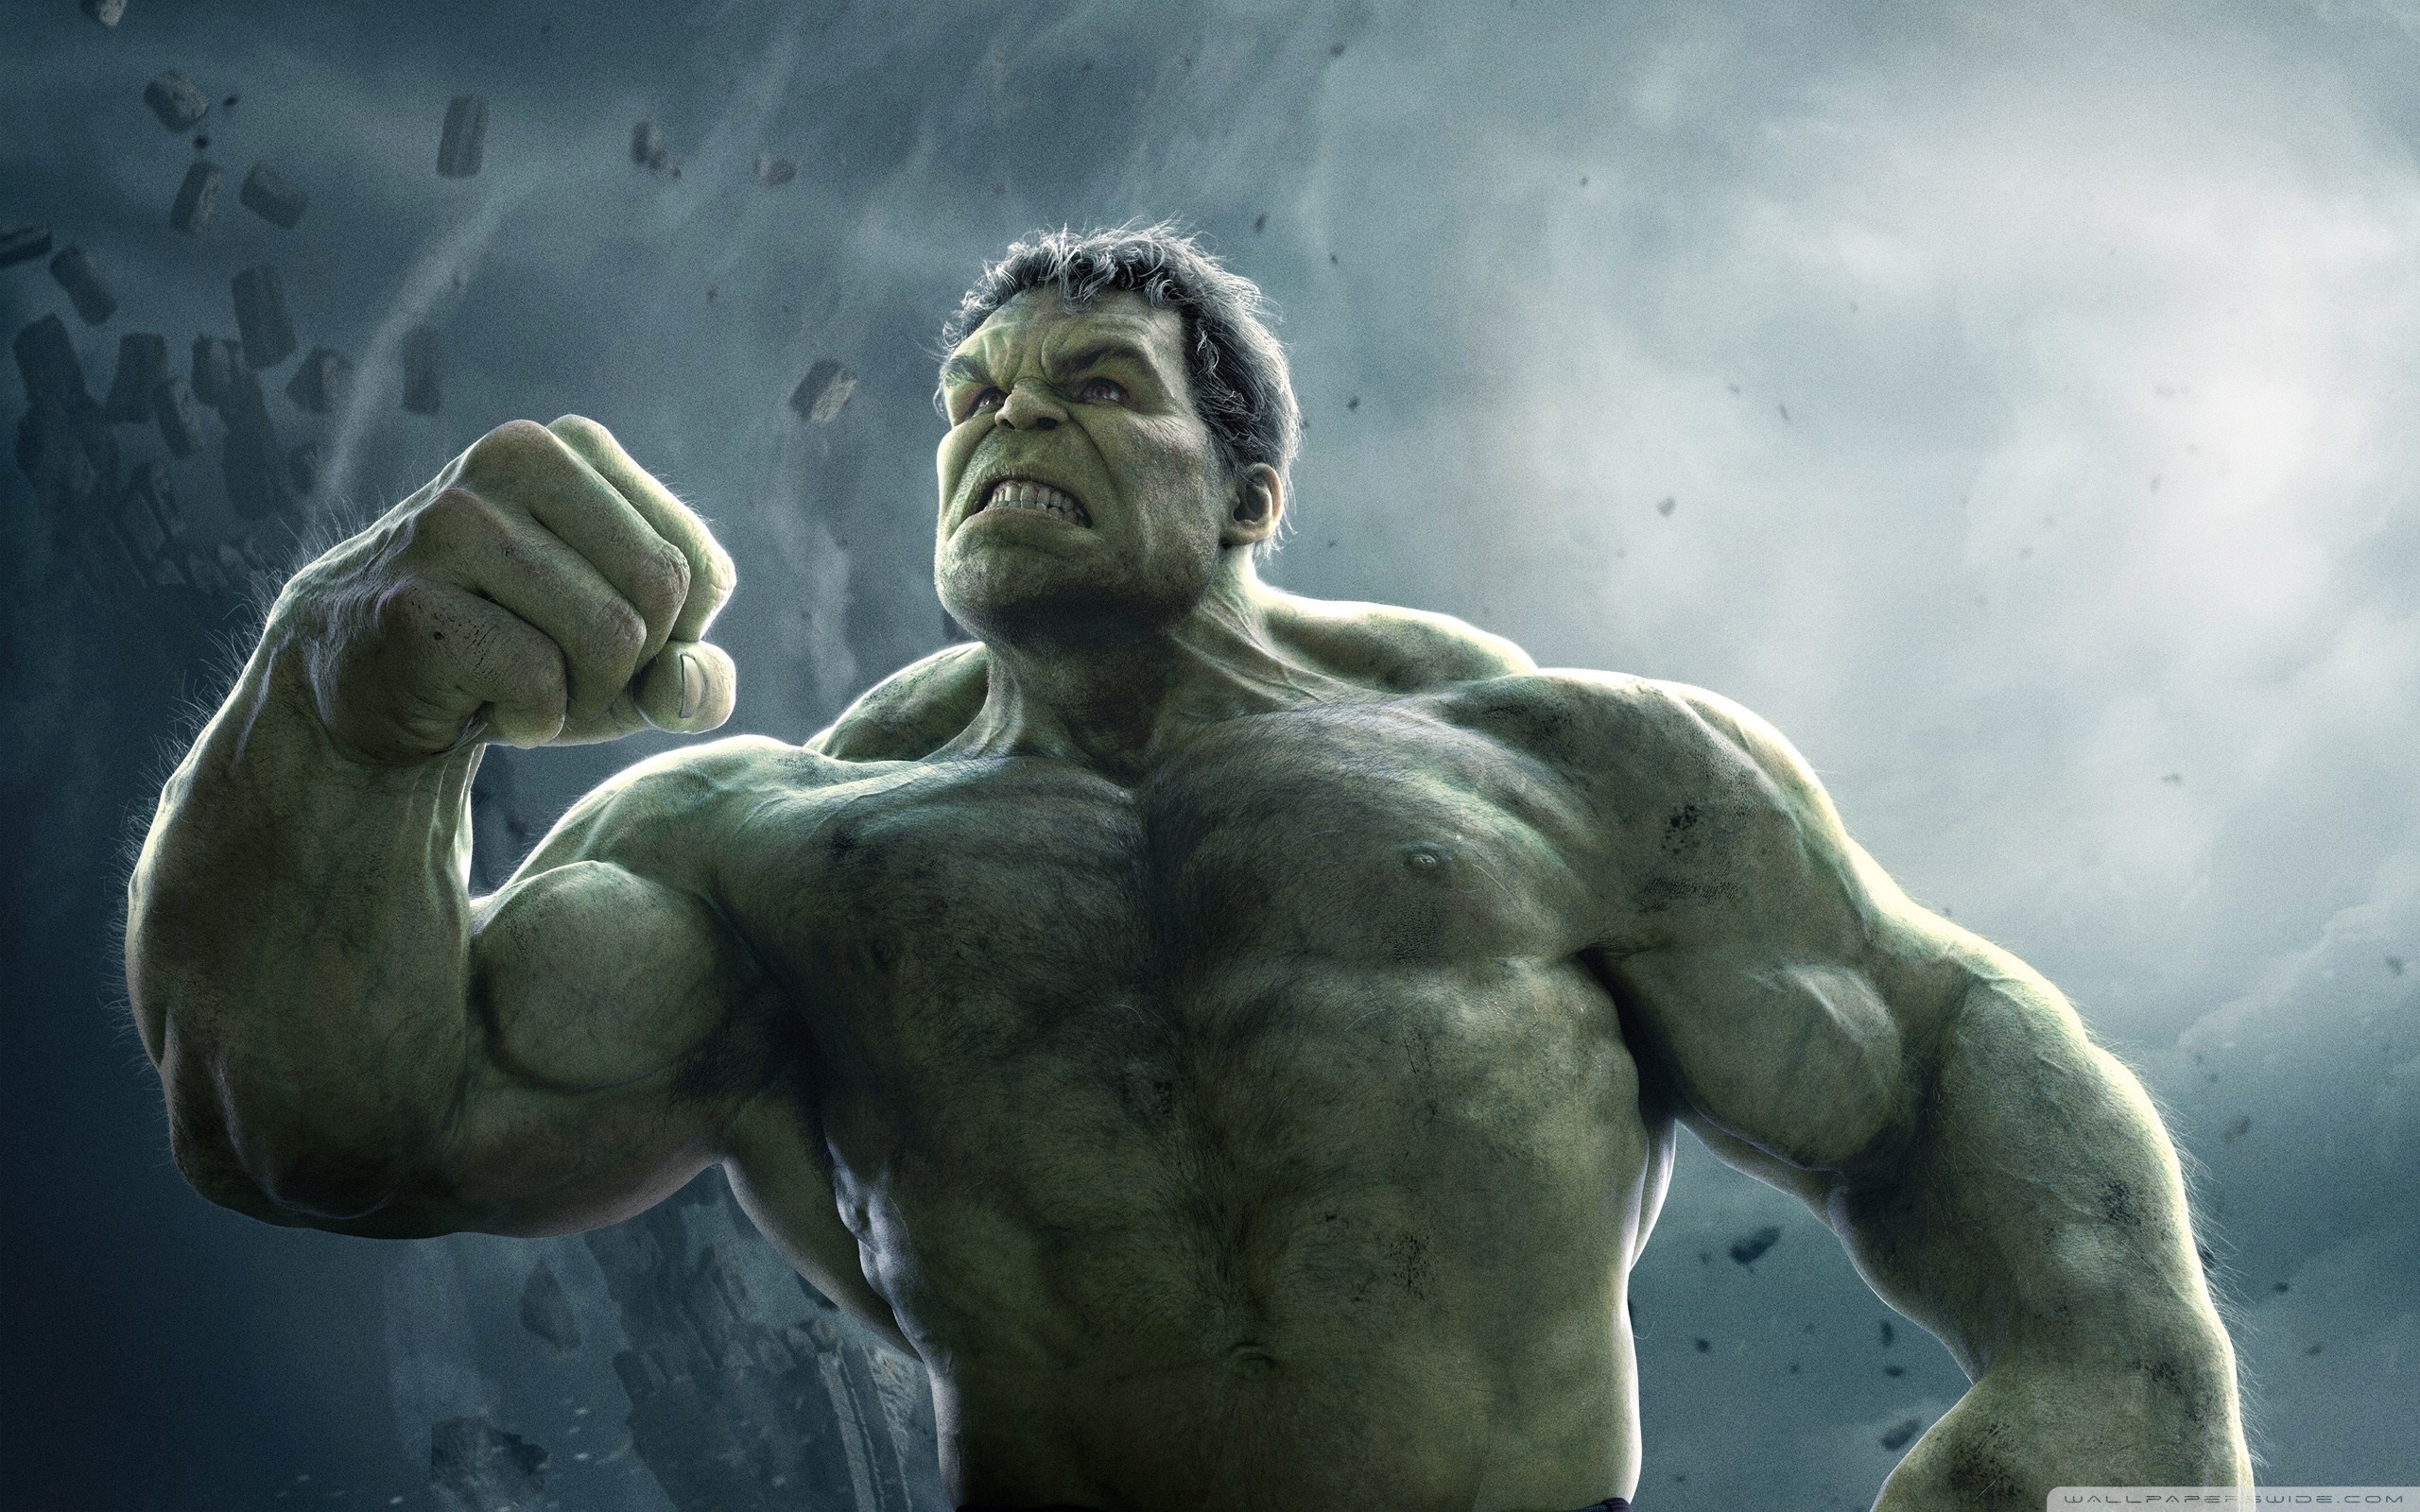 Hulk 4K wallpapers for your desktop or